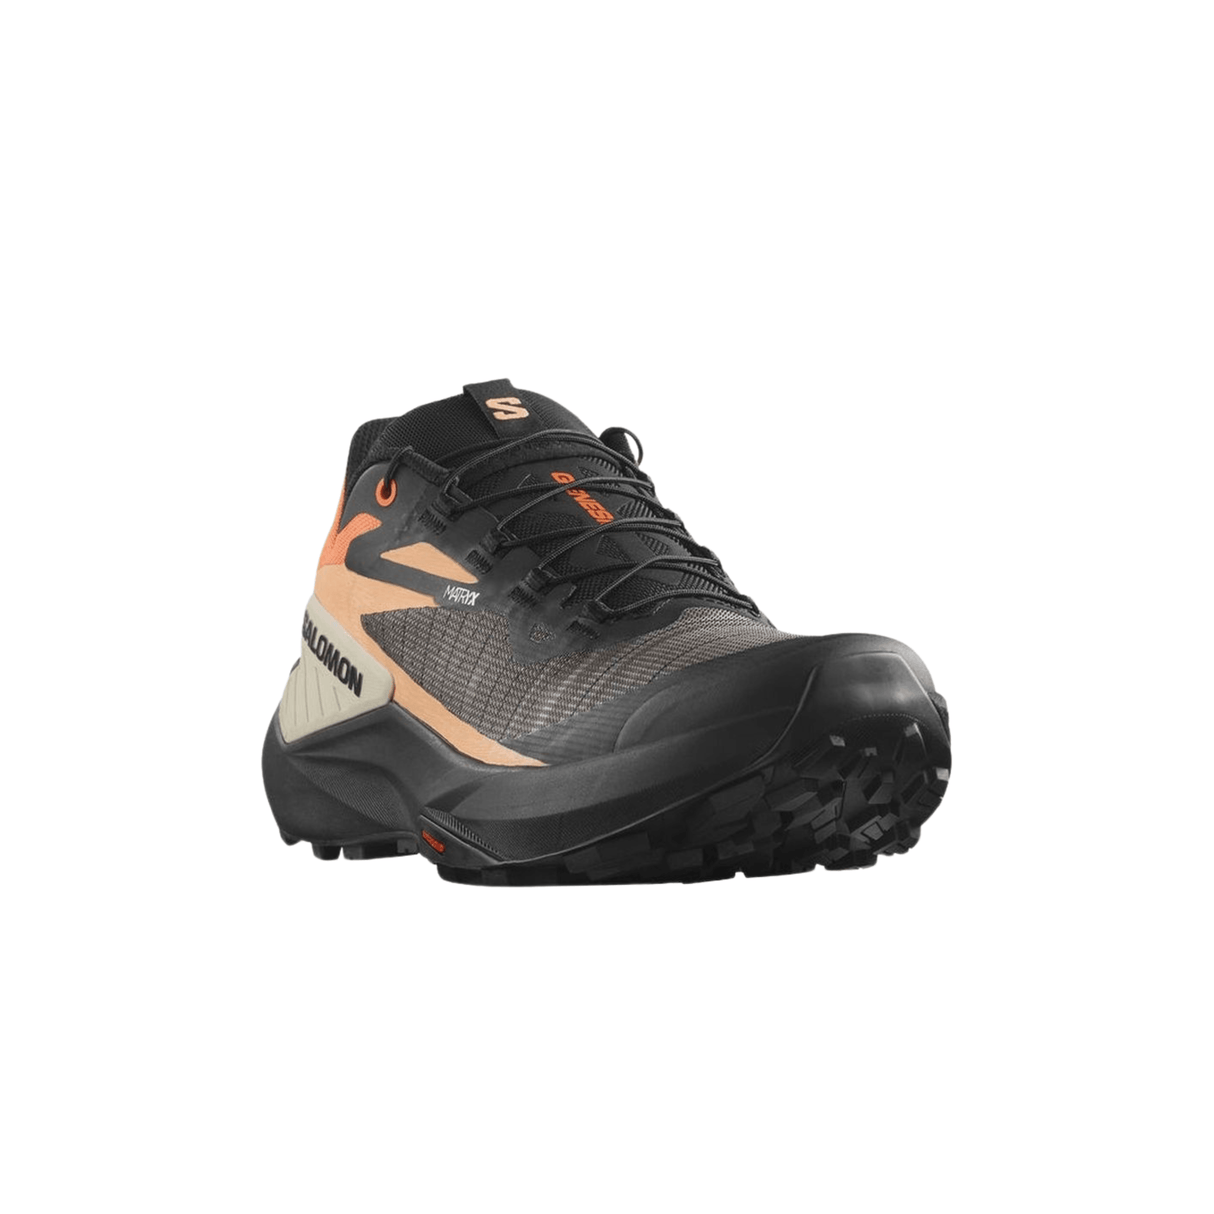 Salomon Men's Genesis Trail Running Shoes (L47526100) - Cam2